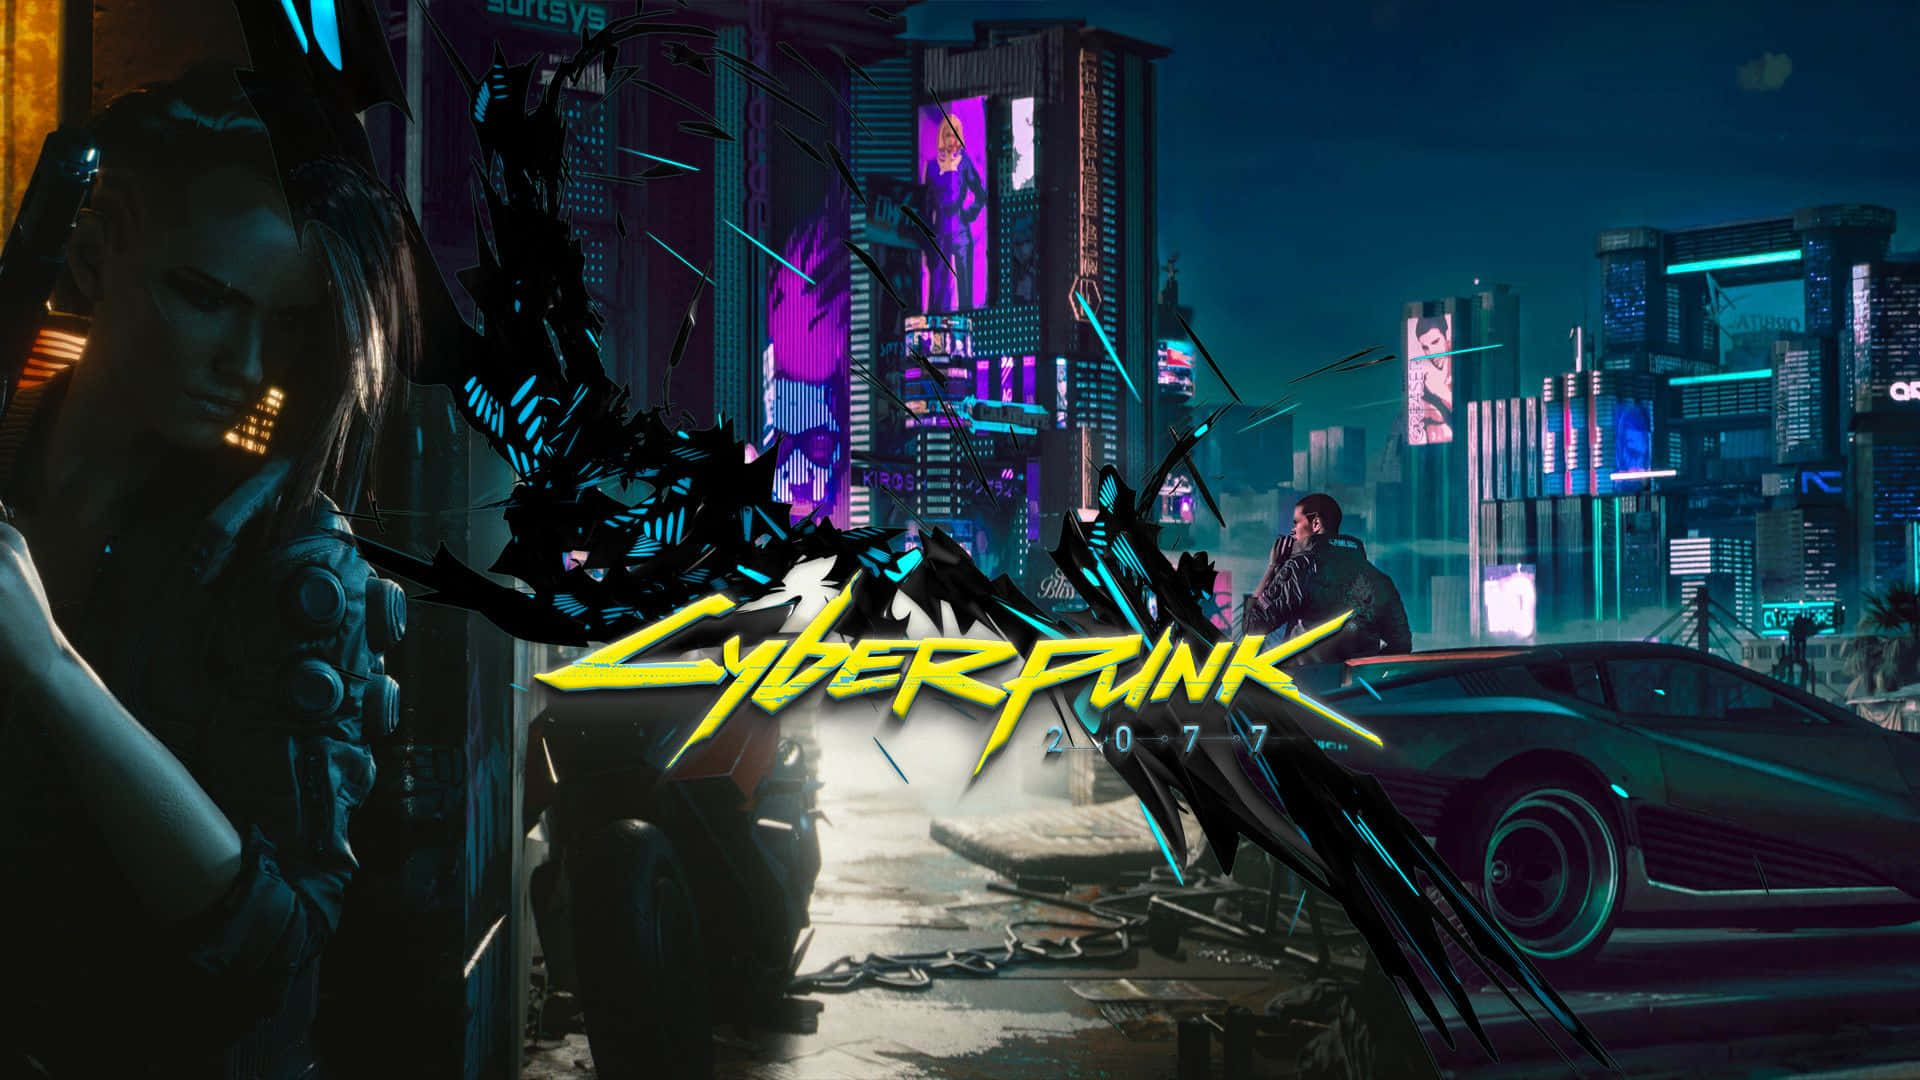 100+] 1080p Cyberpunk 2077 Backgrounds